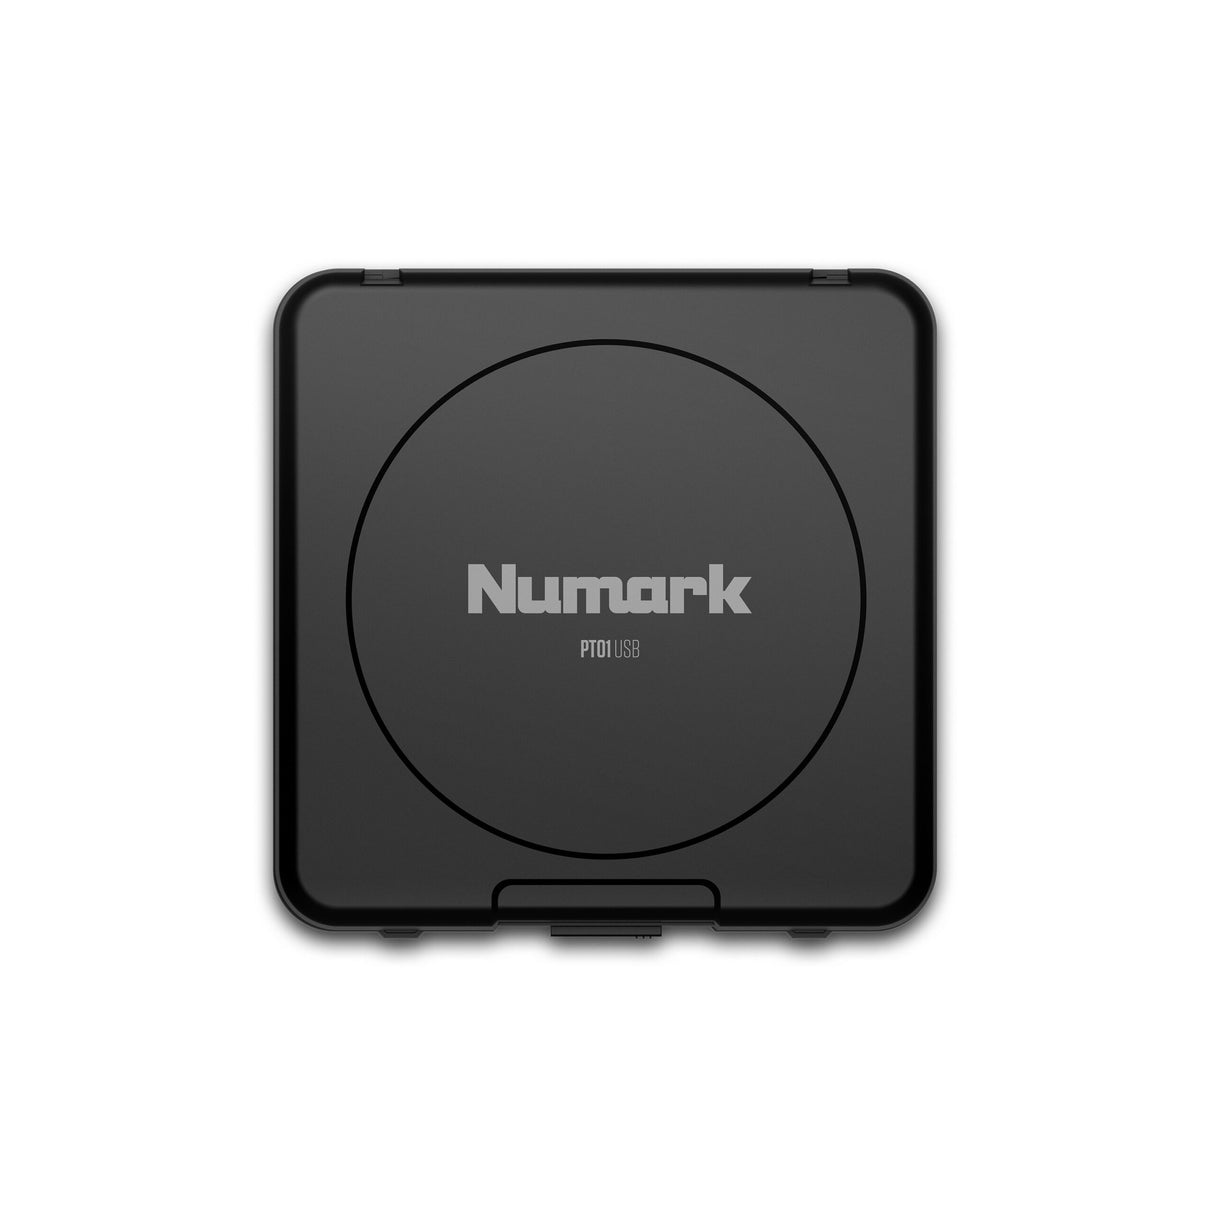 Numark PT01 USB Portable Vinyl-Archiving Turntable